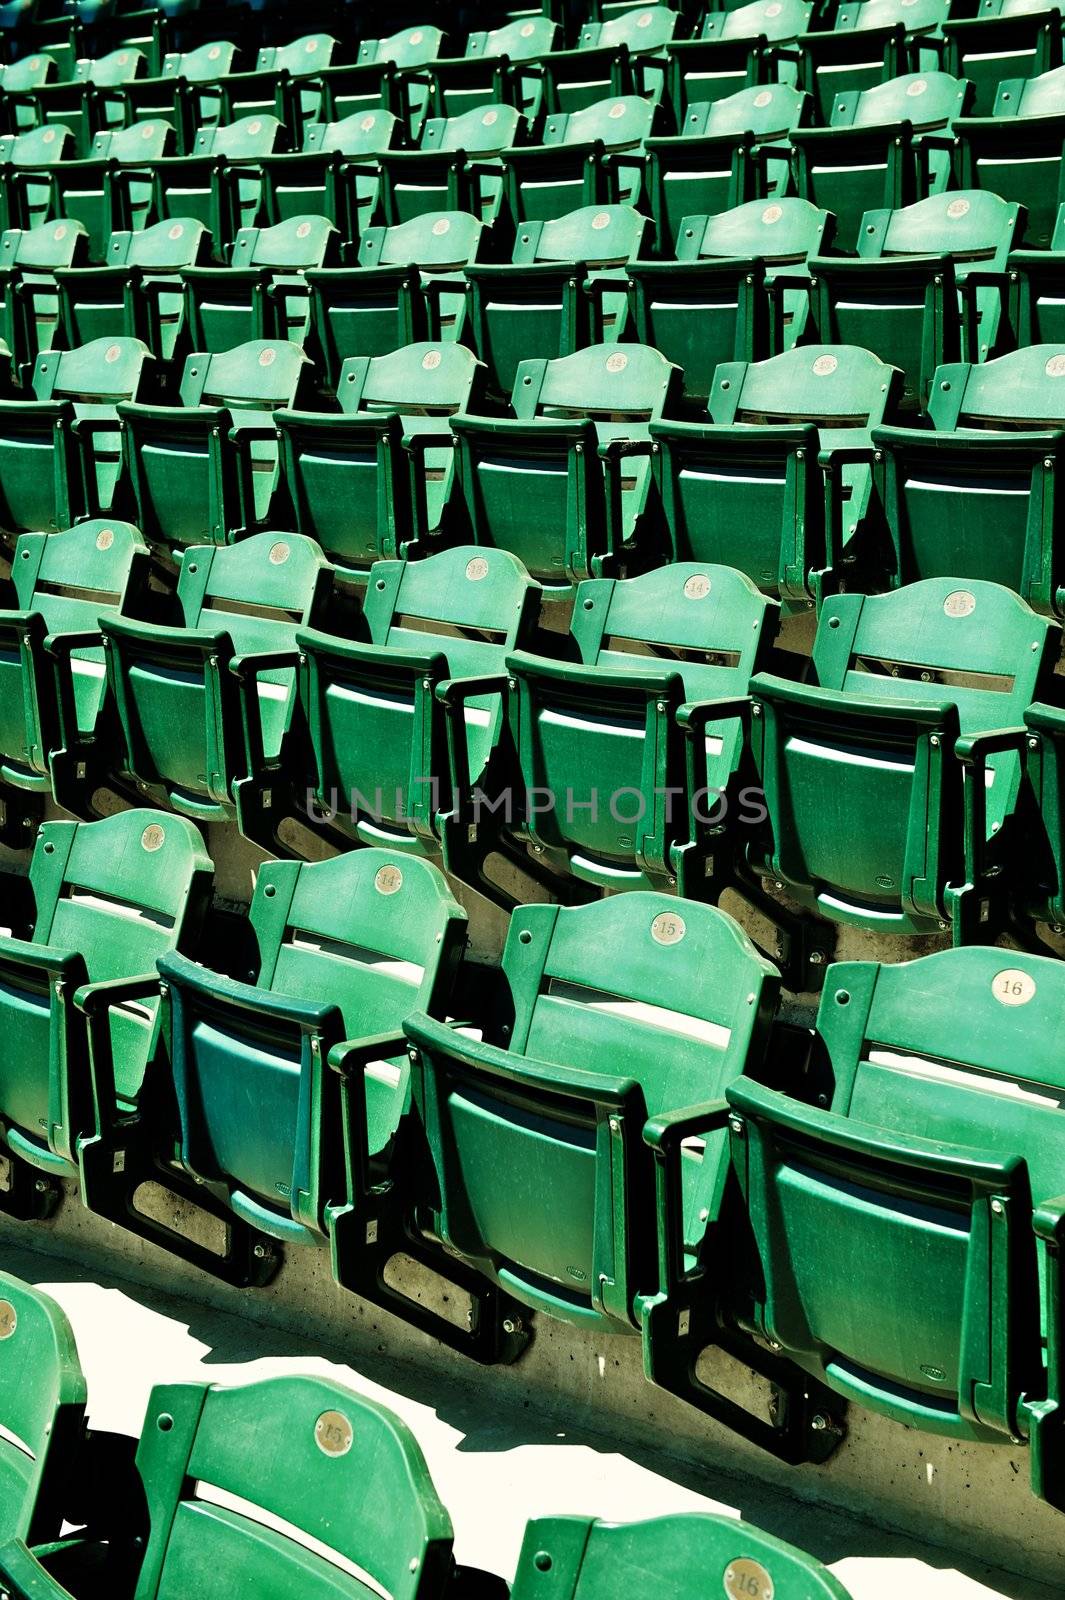 Major League Baseball Stadium Seating by pixelsnap